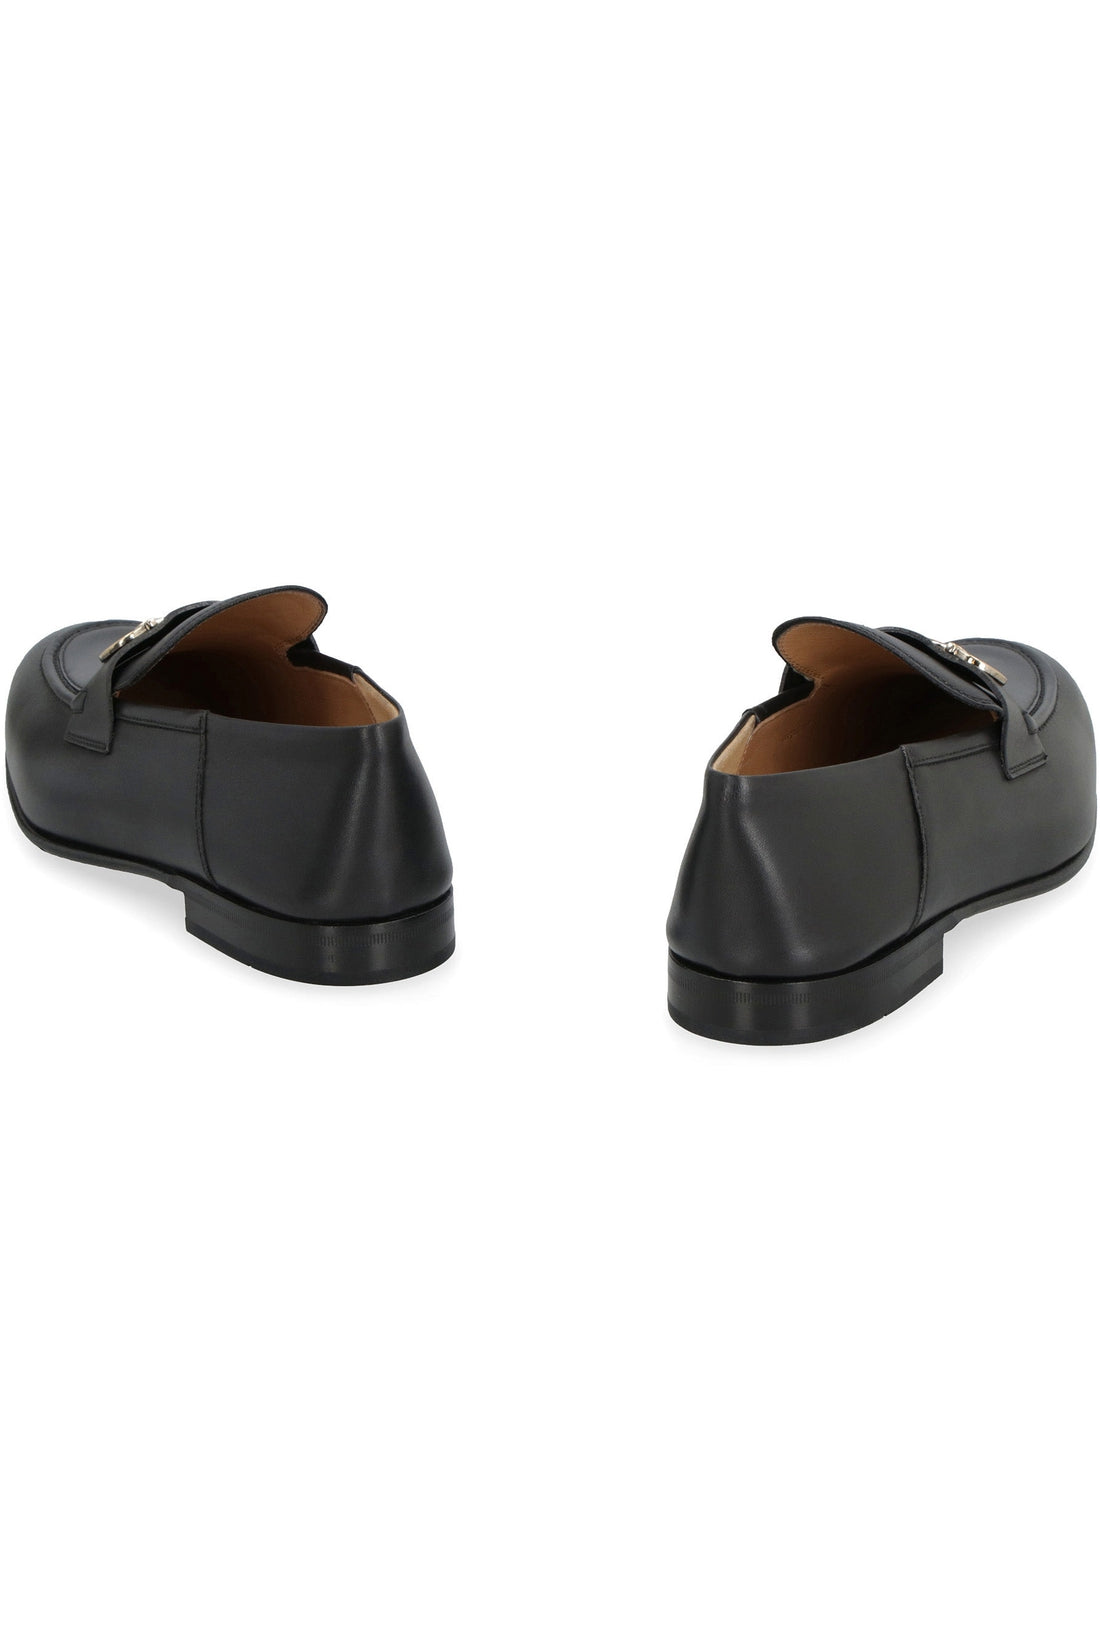 FERRAGAMO-OUTLET-SALE-Leather loafers-ARCHIVIST